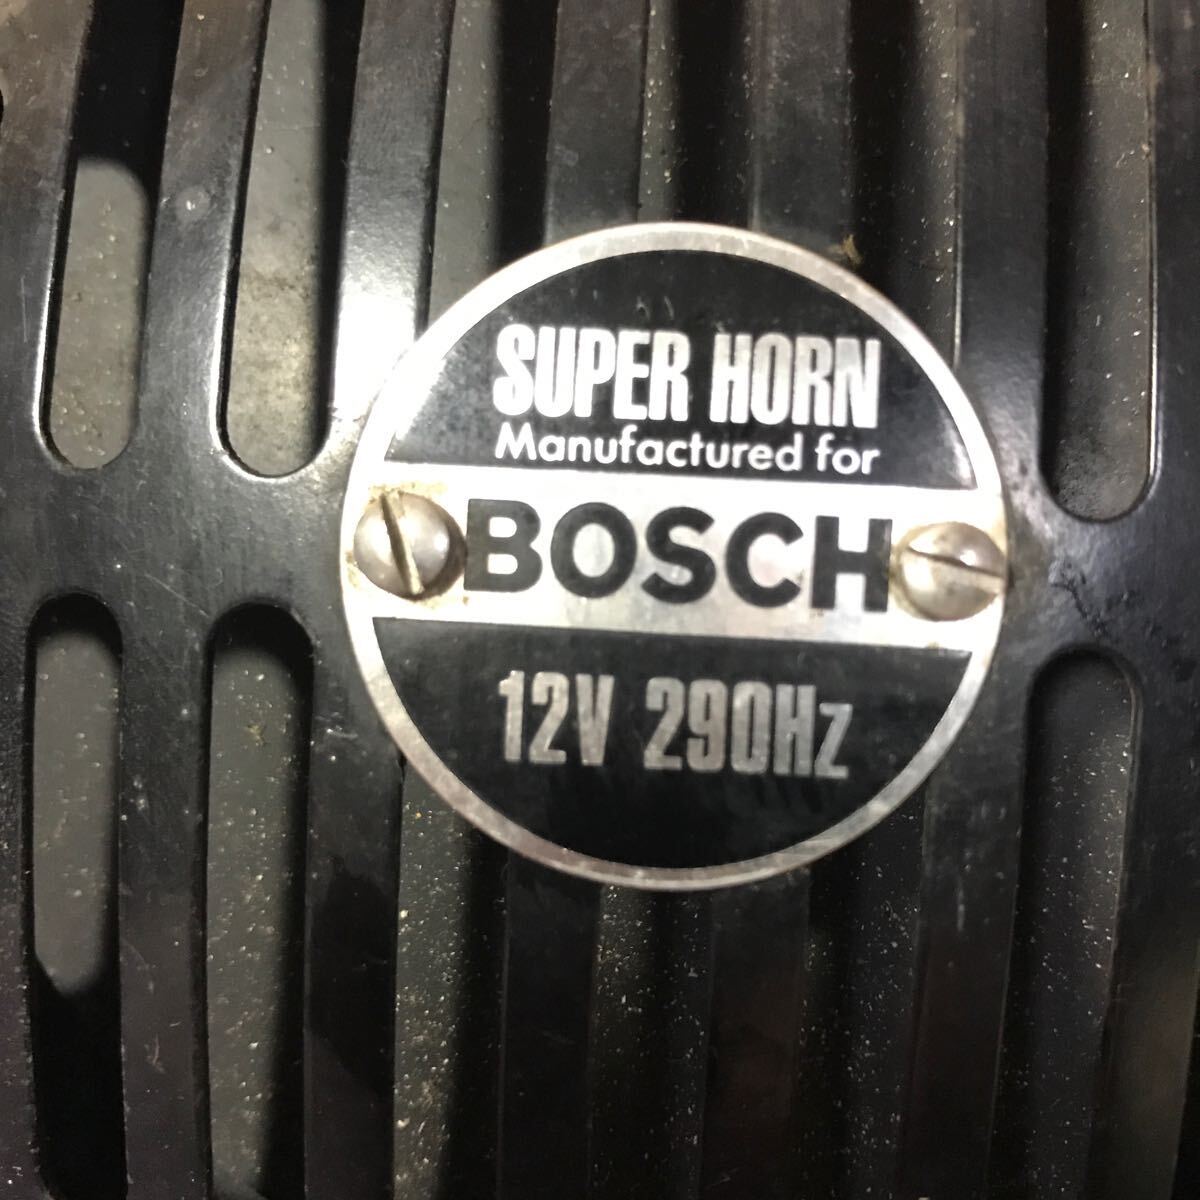 BOSCH SUPER HORN 12V 290Hz 車用 スピーカー スーパーホーン ボッシュ 2個セット 動作確認 匿名配送 送料無料 ホーン